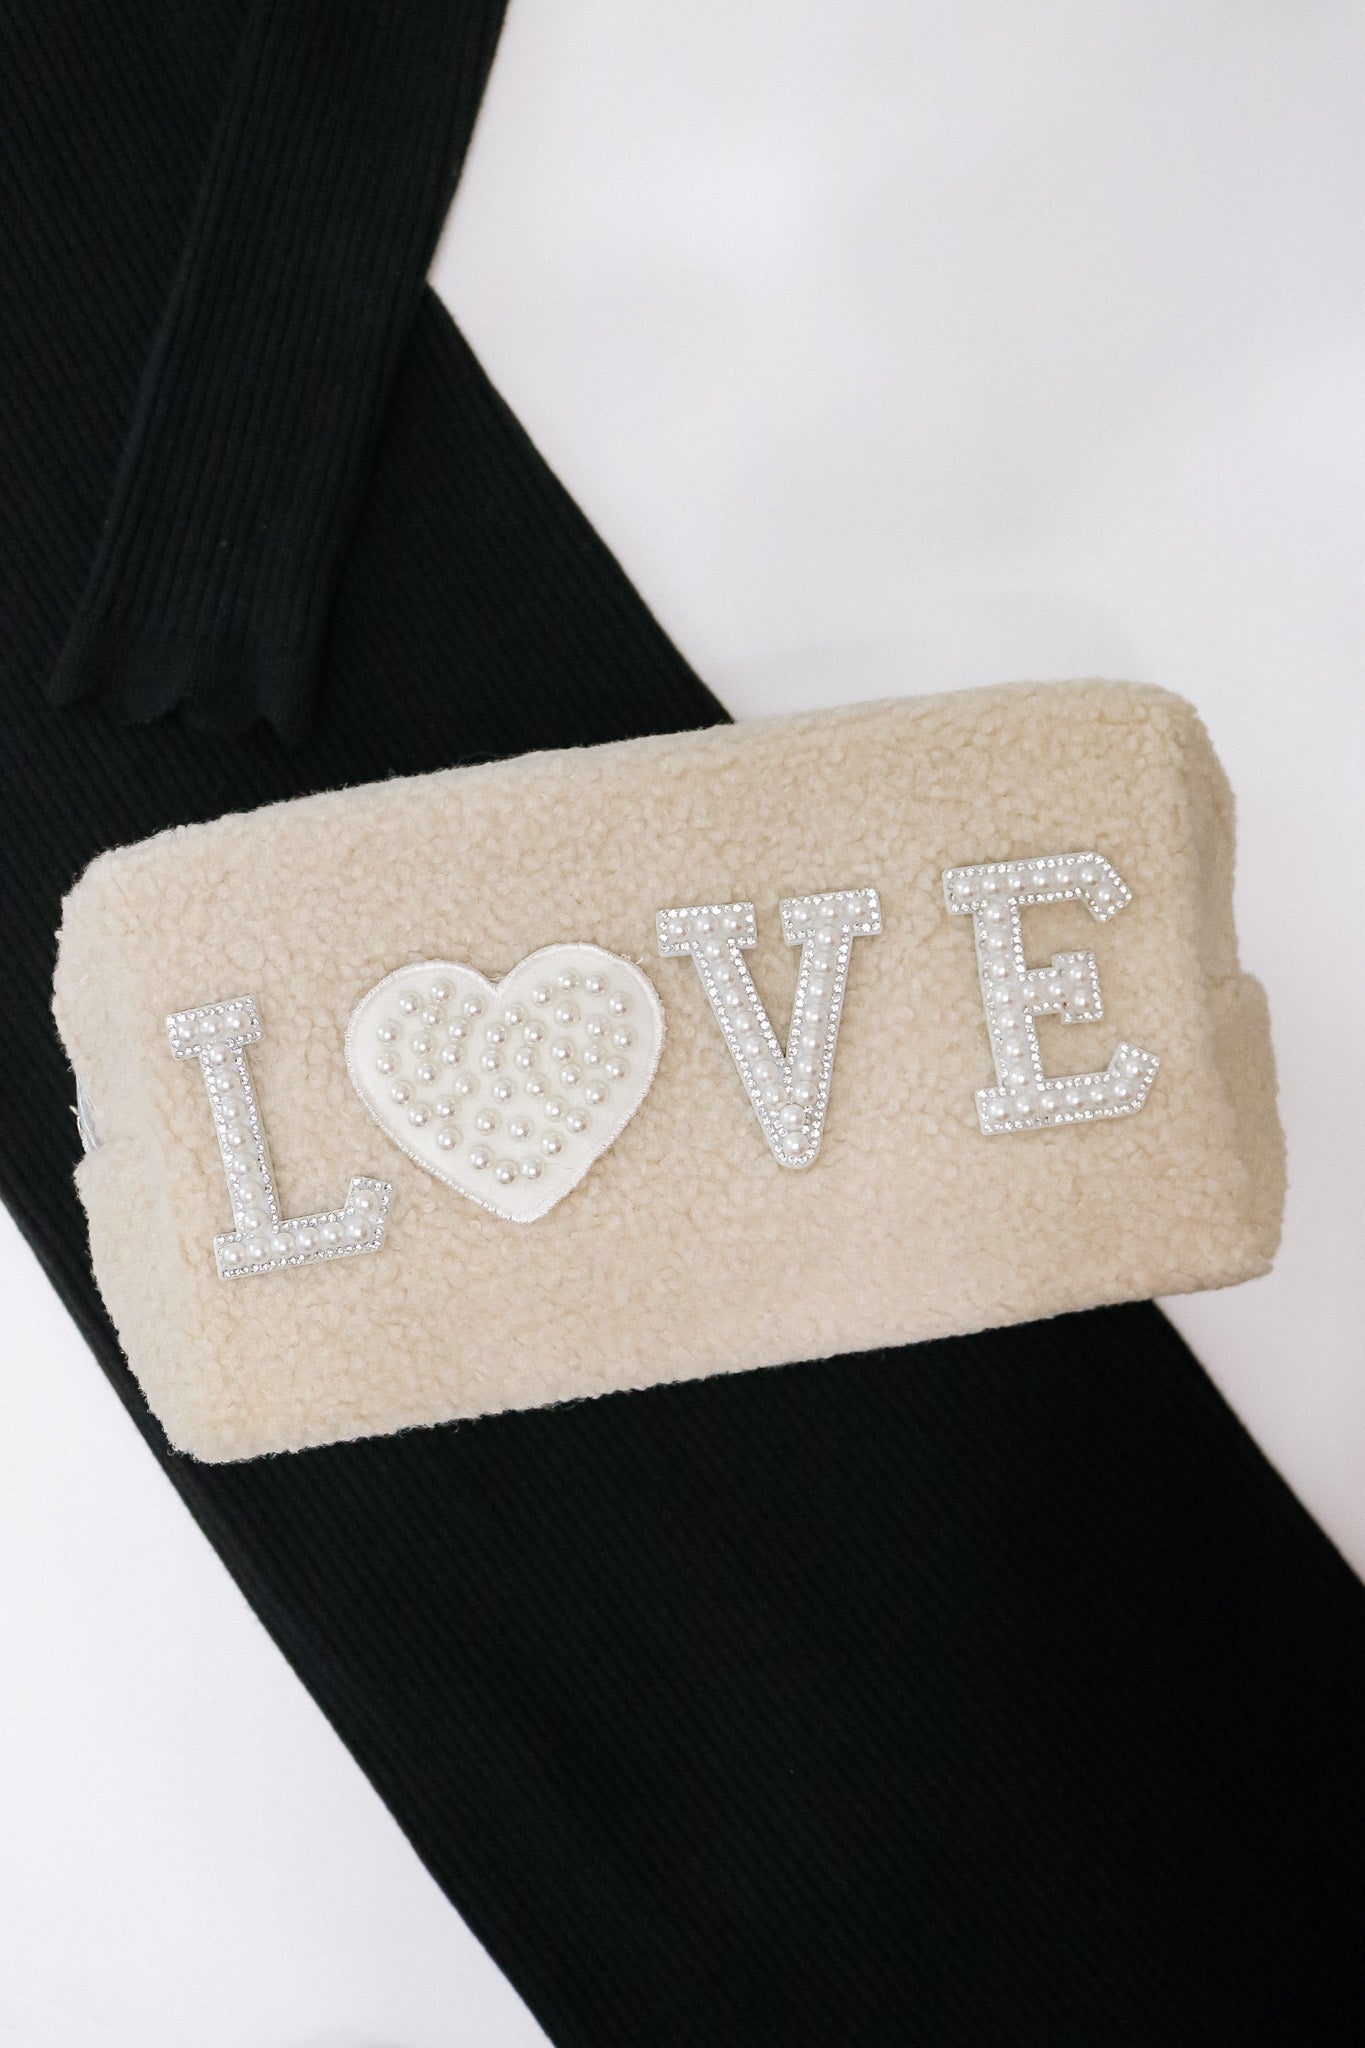 'LOVE' Sherpa Cosmetic Bag (ivory)